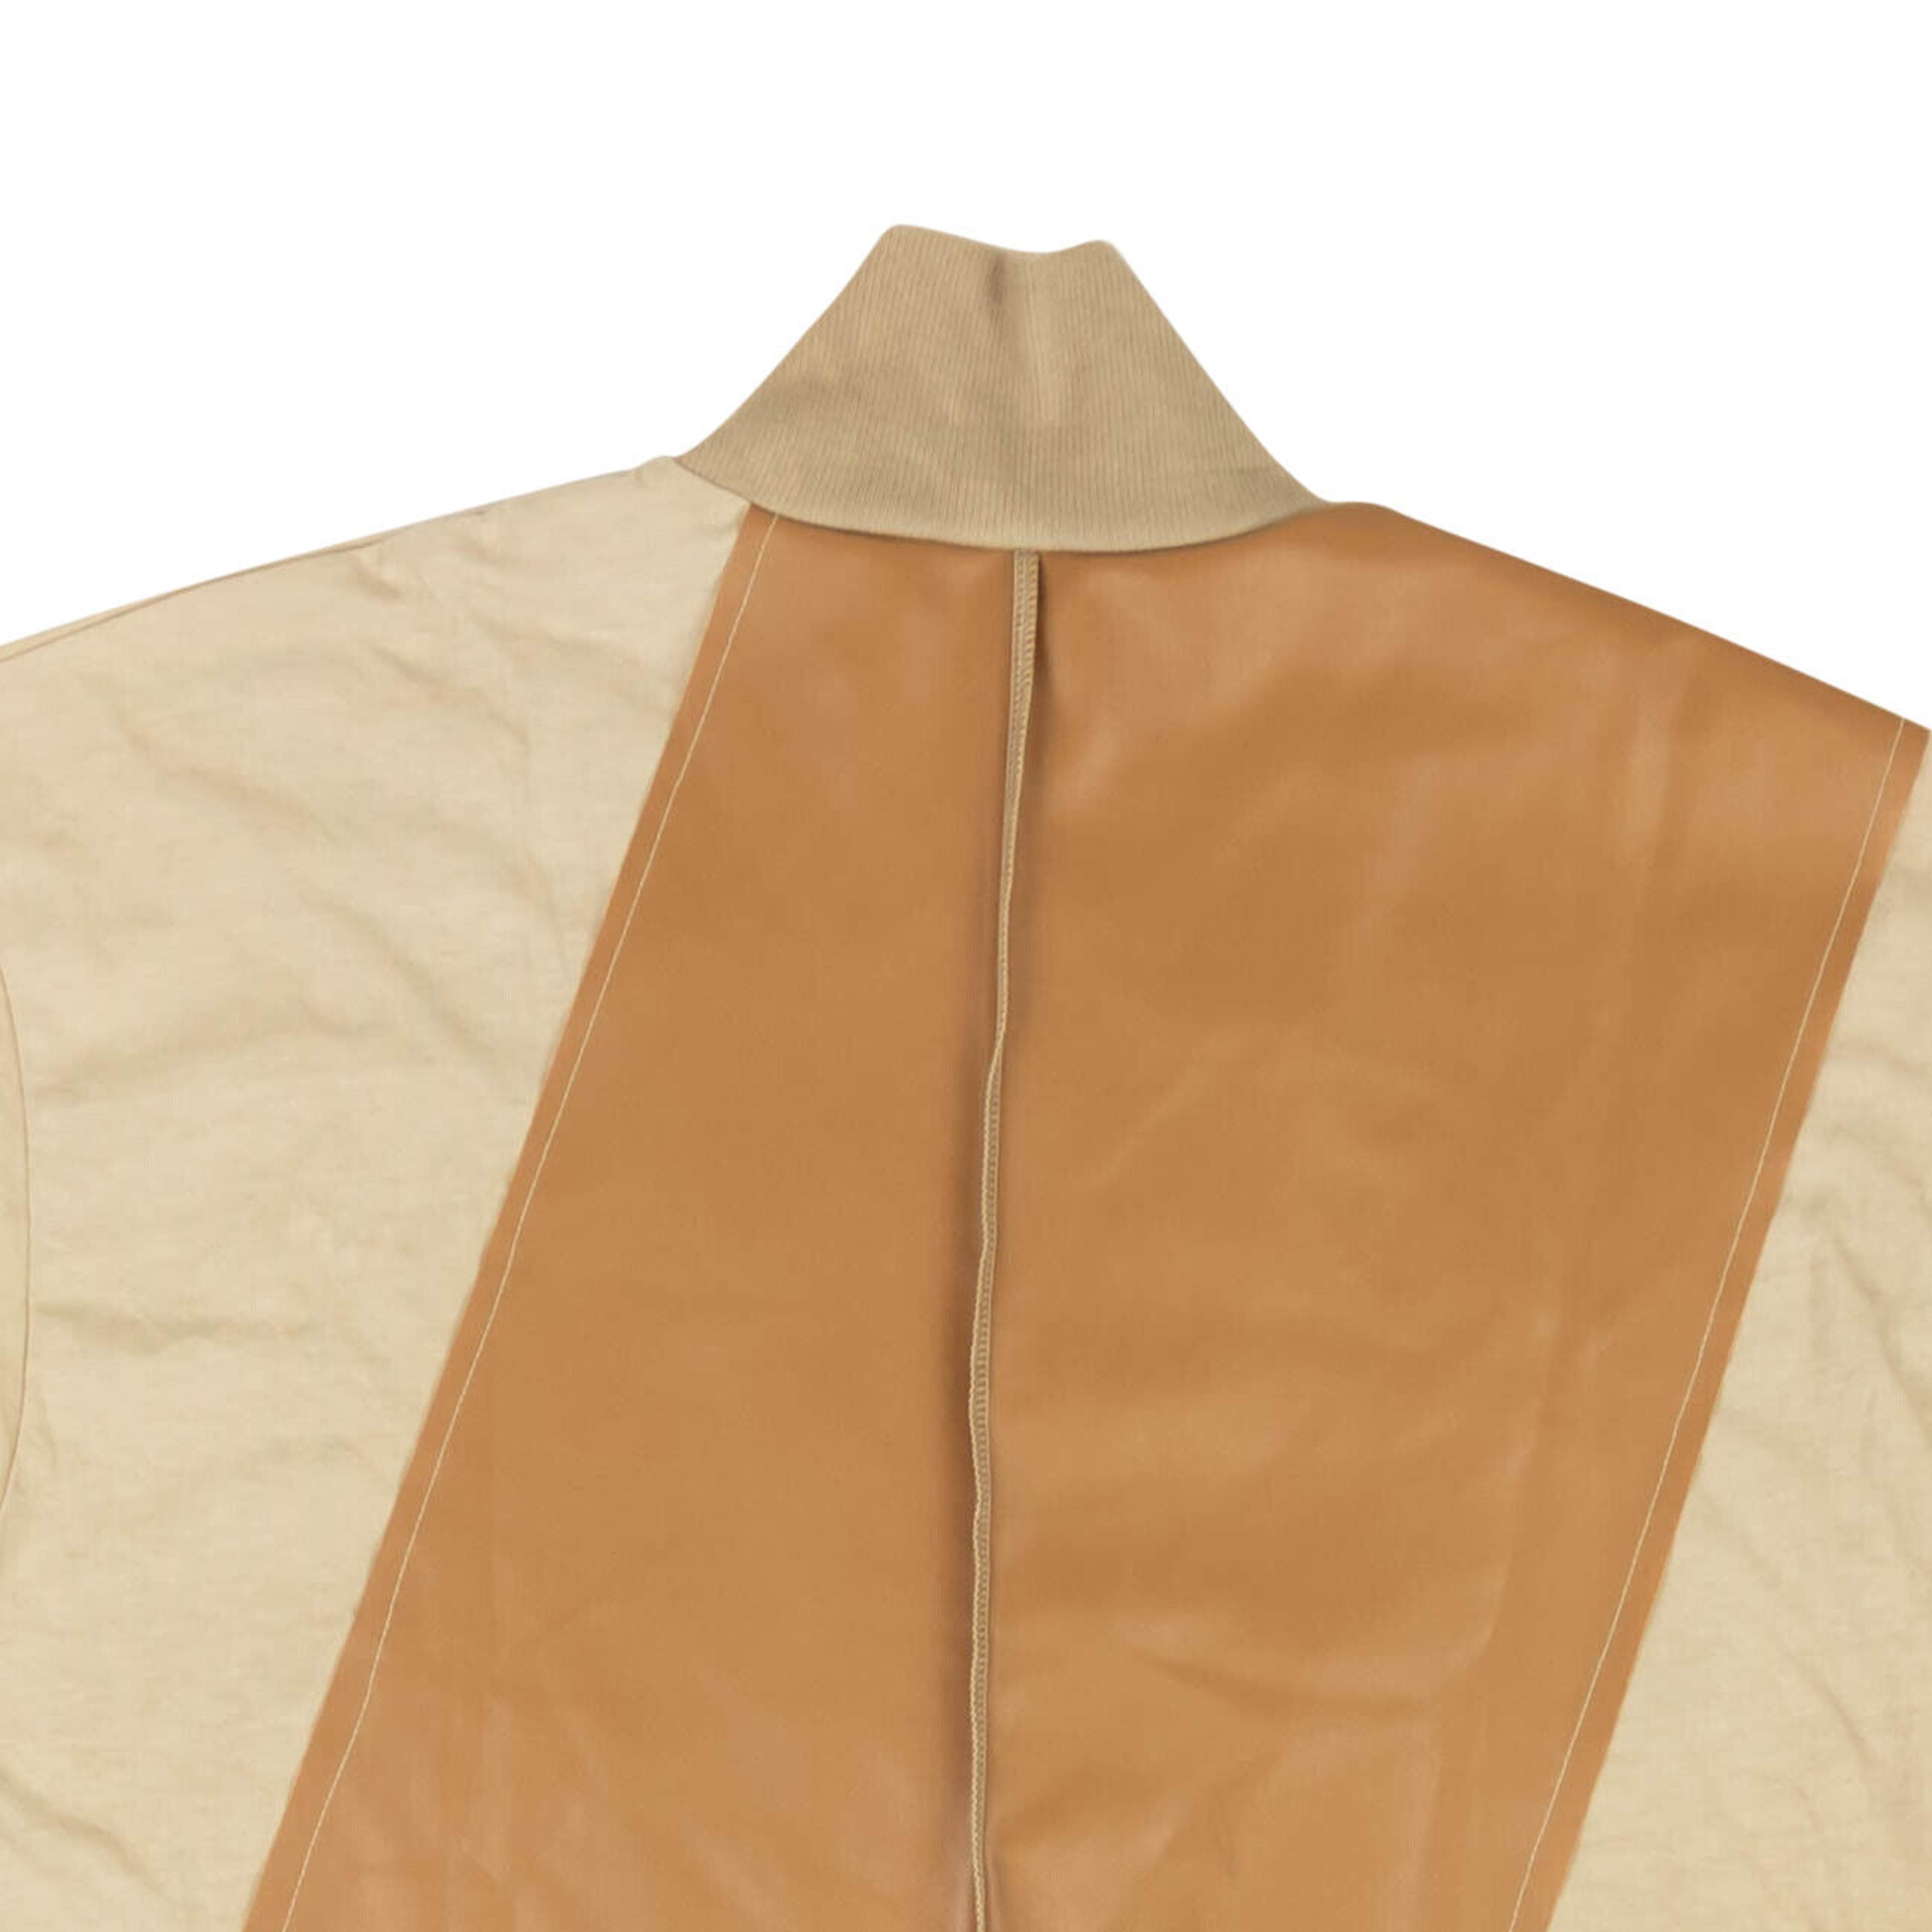 Alternate View 3 of A Plan Application Men's Brown Rubber Half Zip Shirt - Beige/Pur